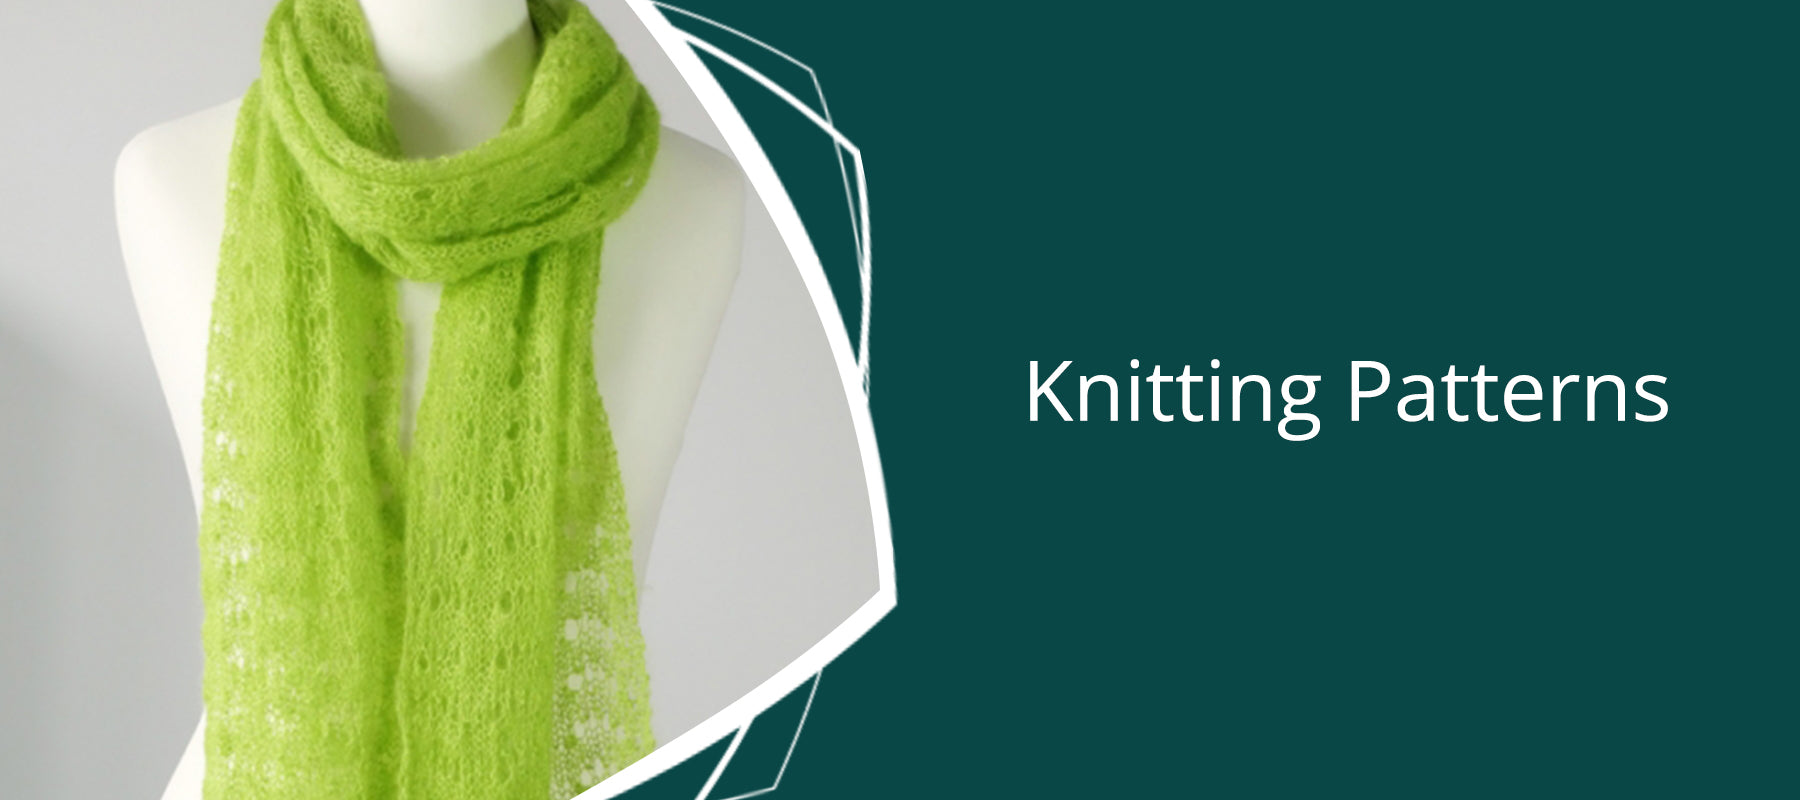 Knitting Patterns - Thread Collective Australia